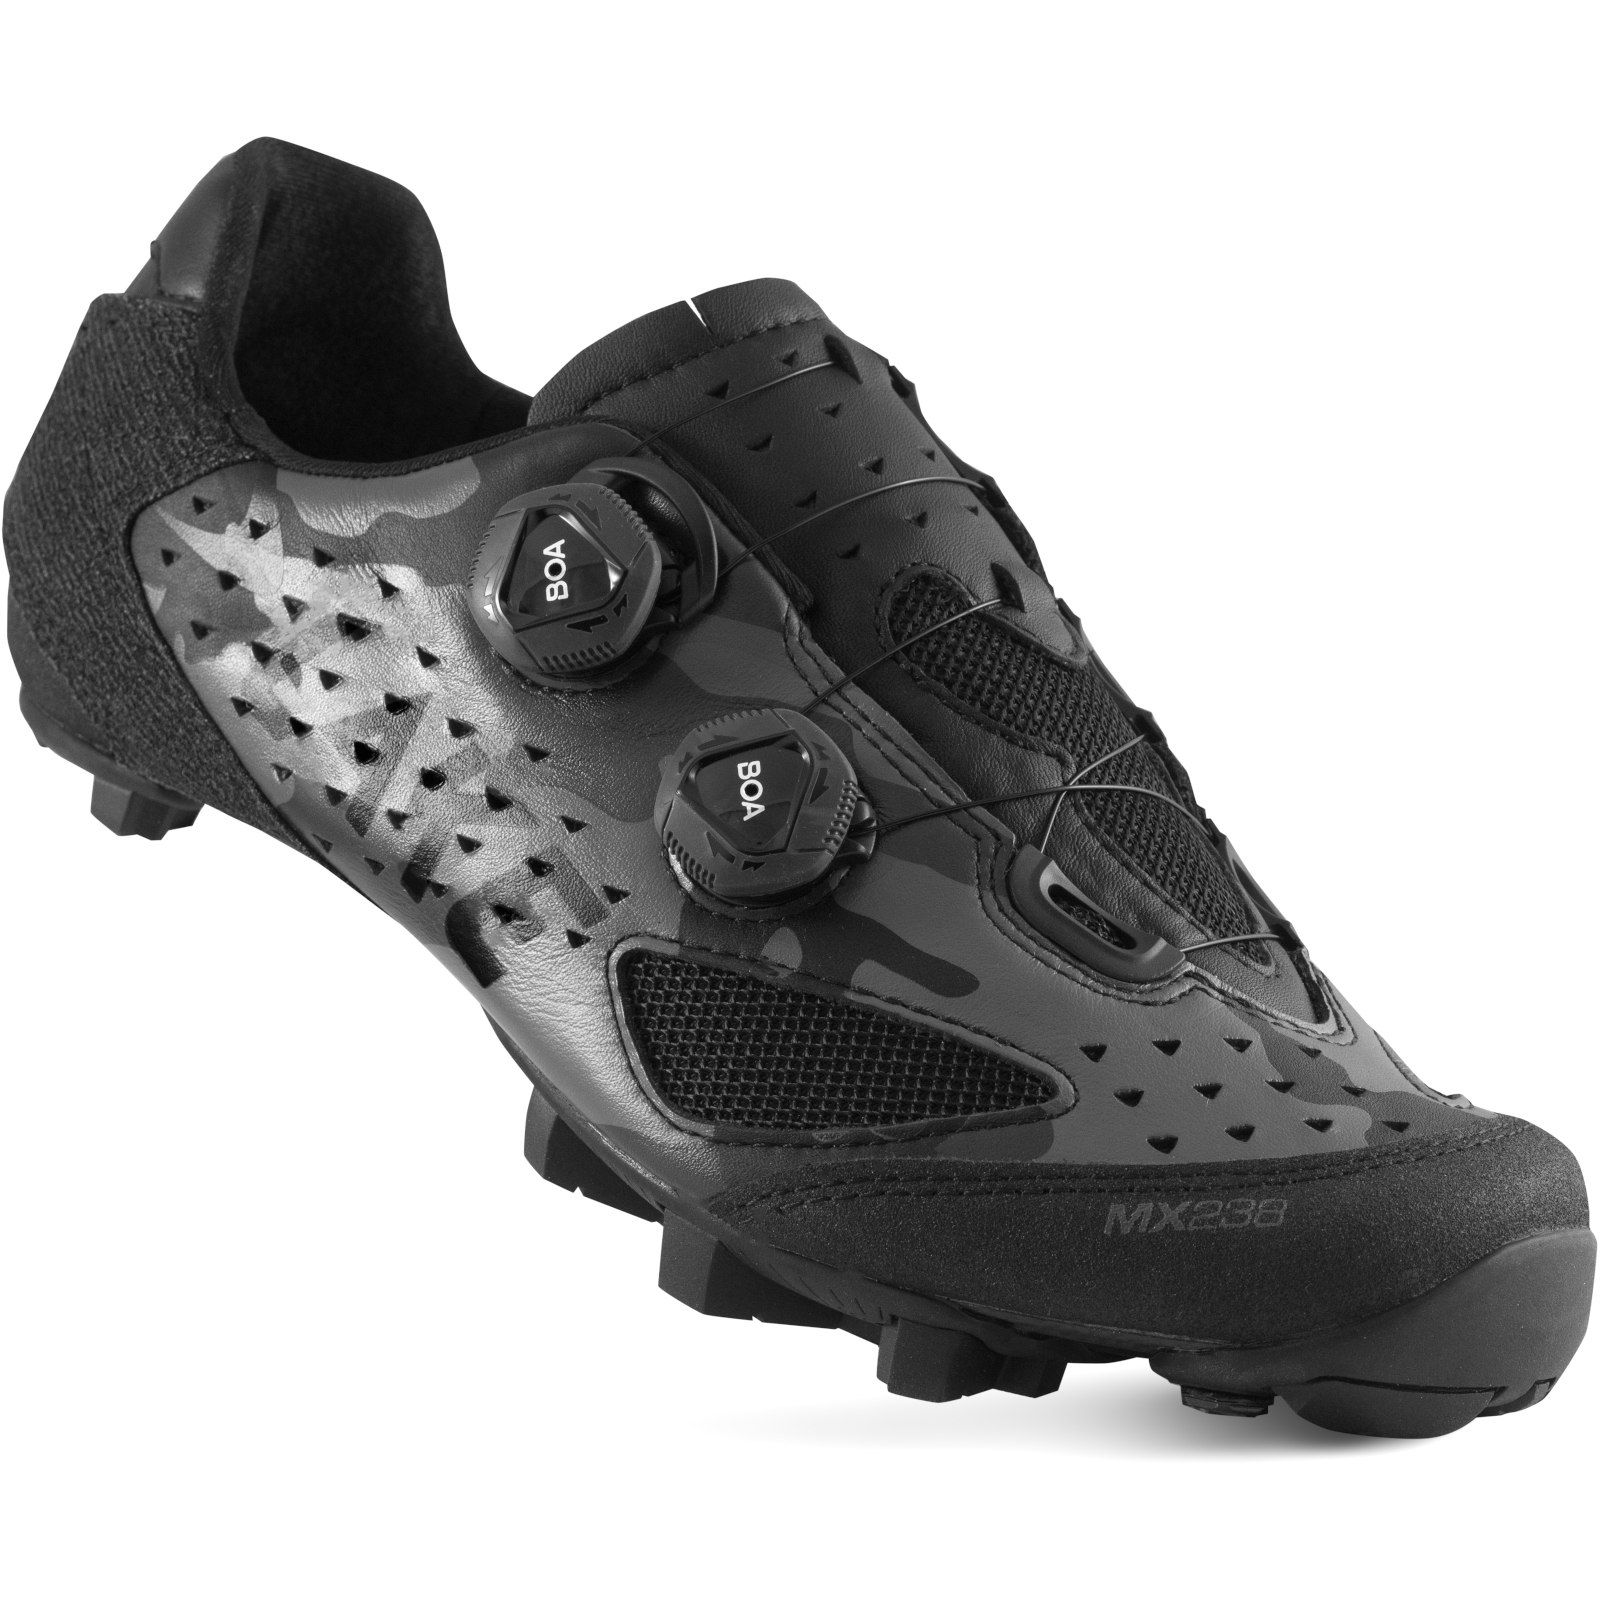 Image of Lake MX 238 MTB Shoes - black camo